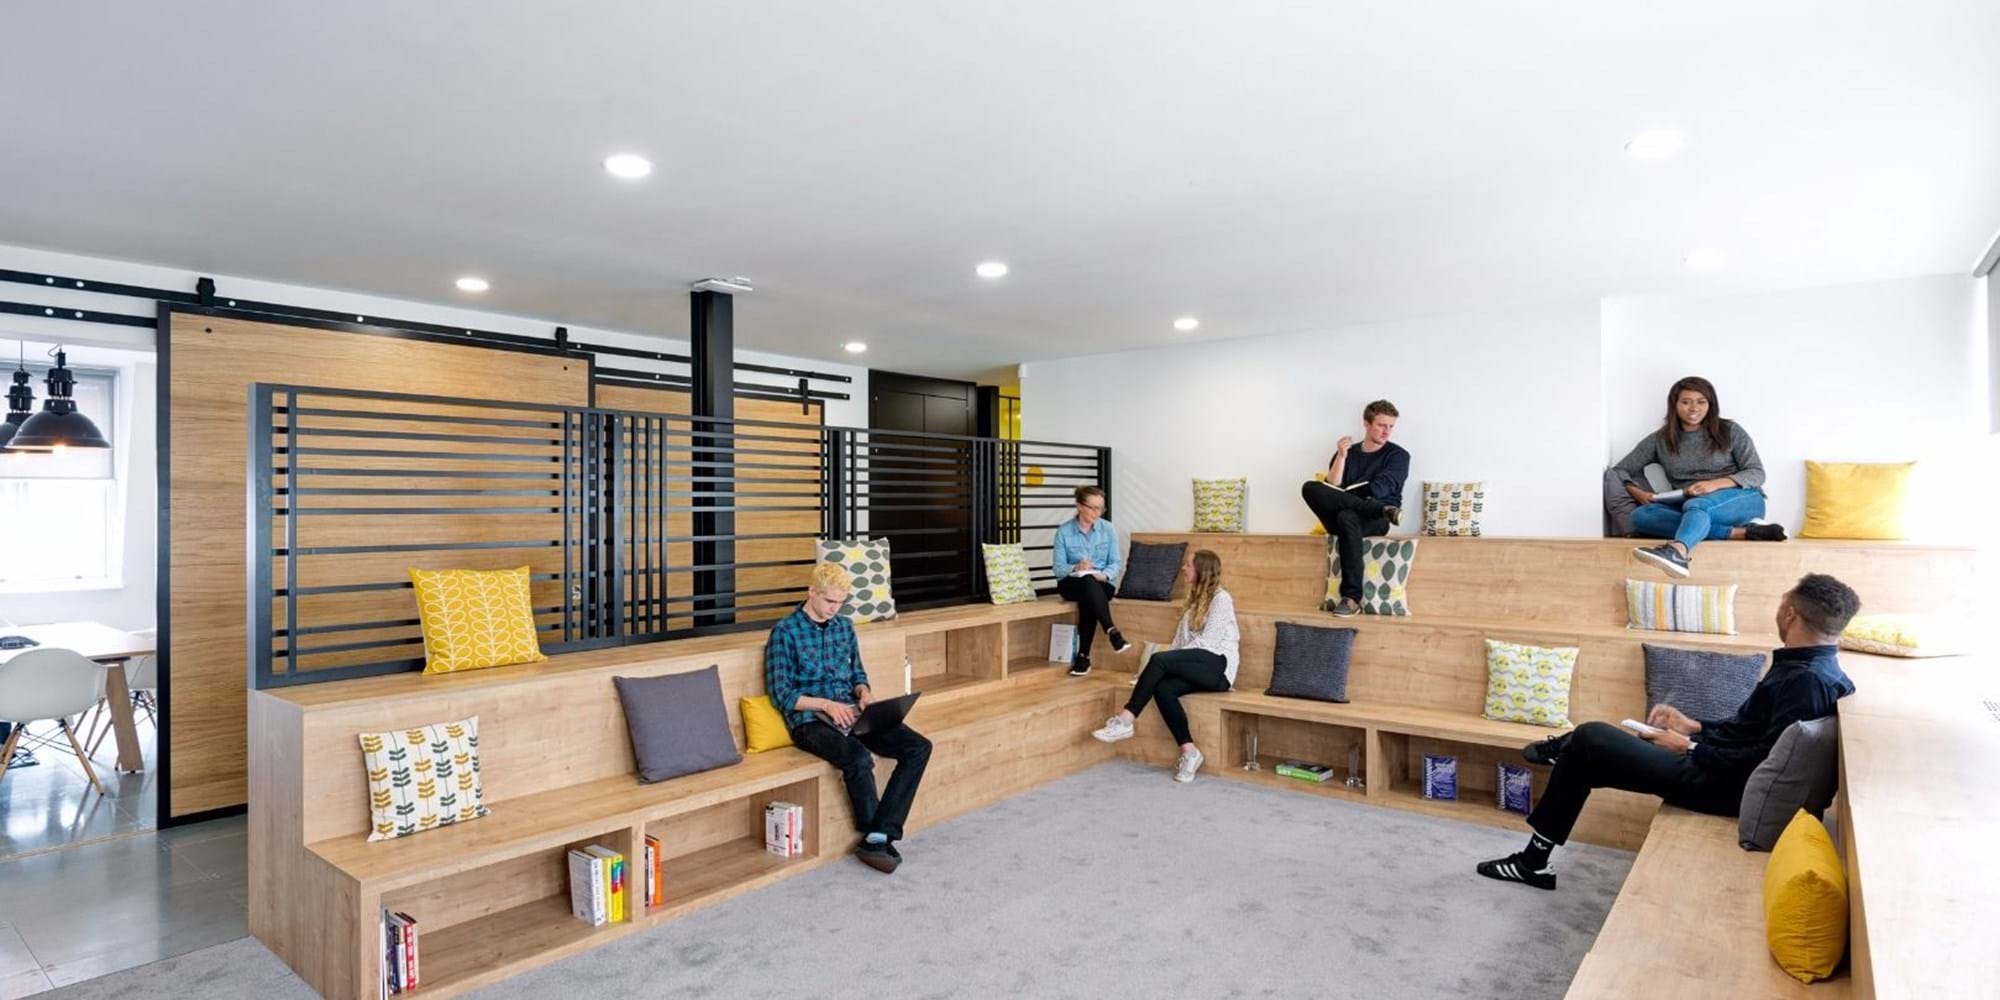 Modus Workspace office design, fit out and refurbishment - Ruderfinn - Ruder Finn 08 highres sRGB.jpg